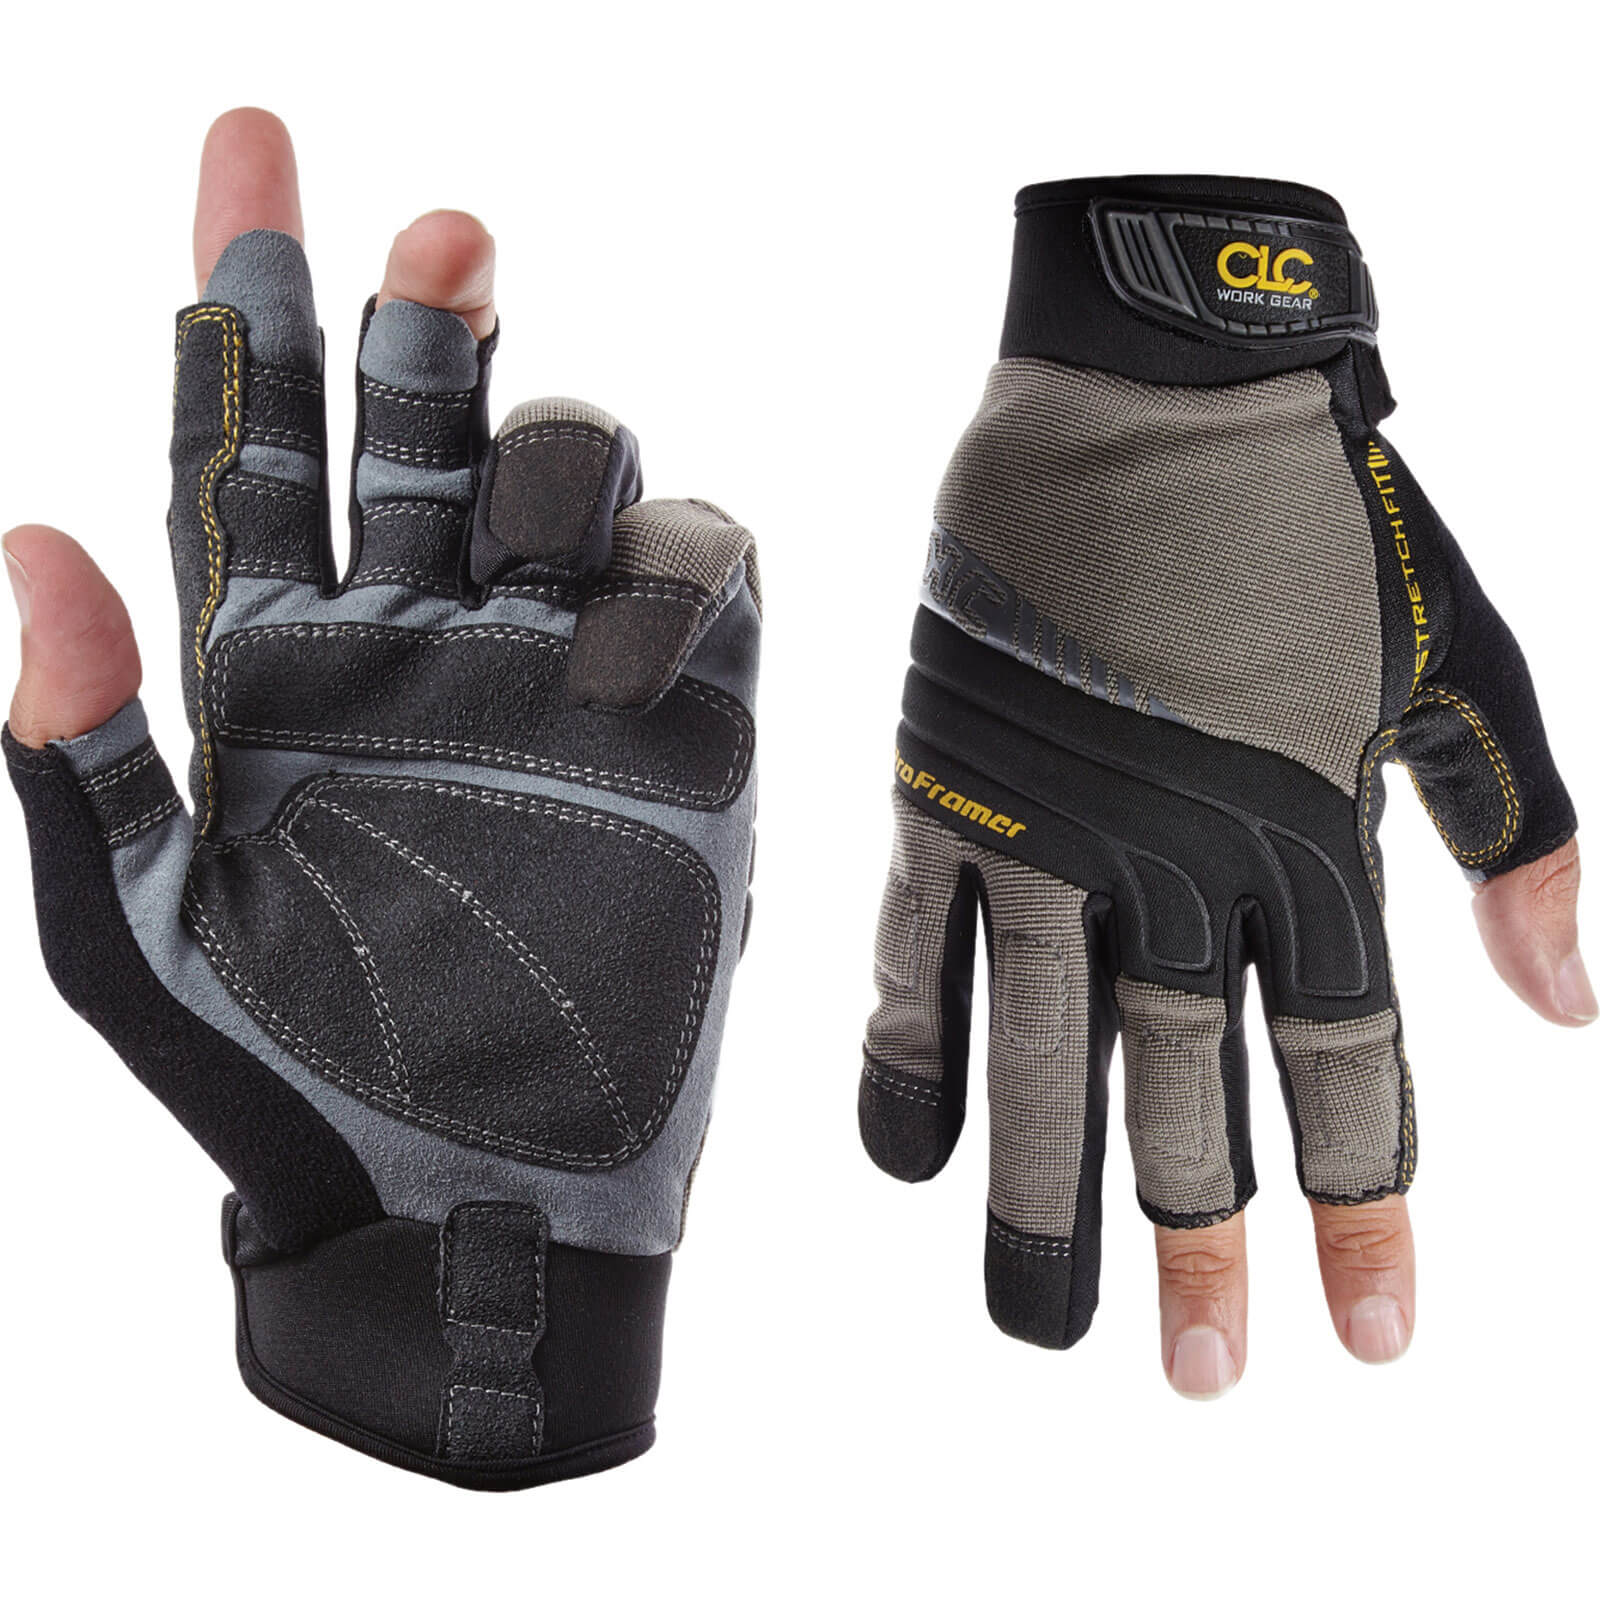 Kunys Flex Grip Pro Framer Gloves L